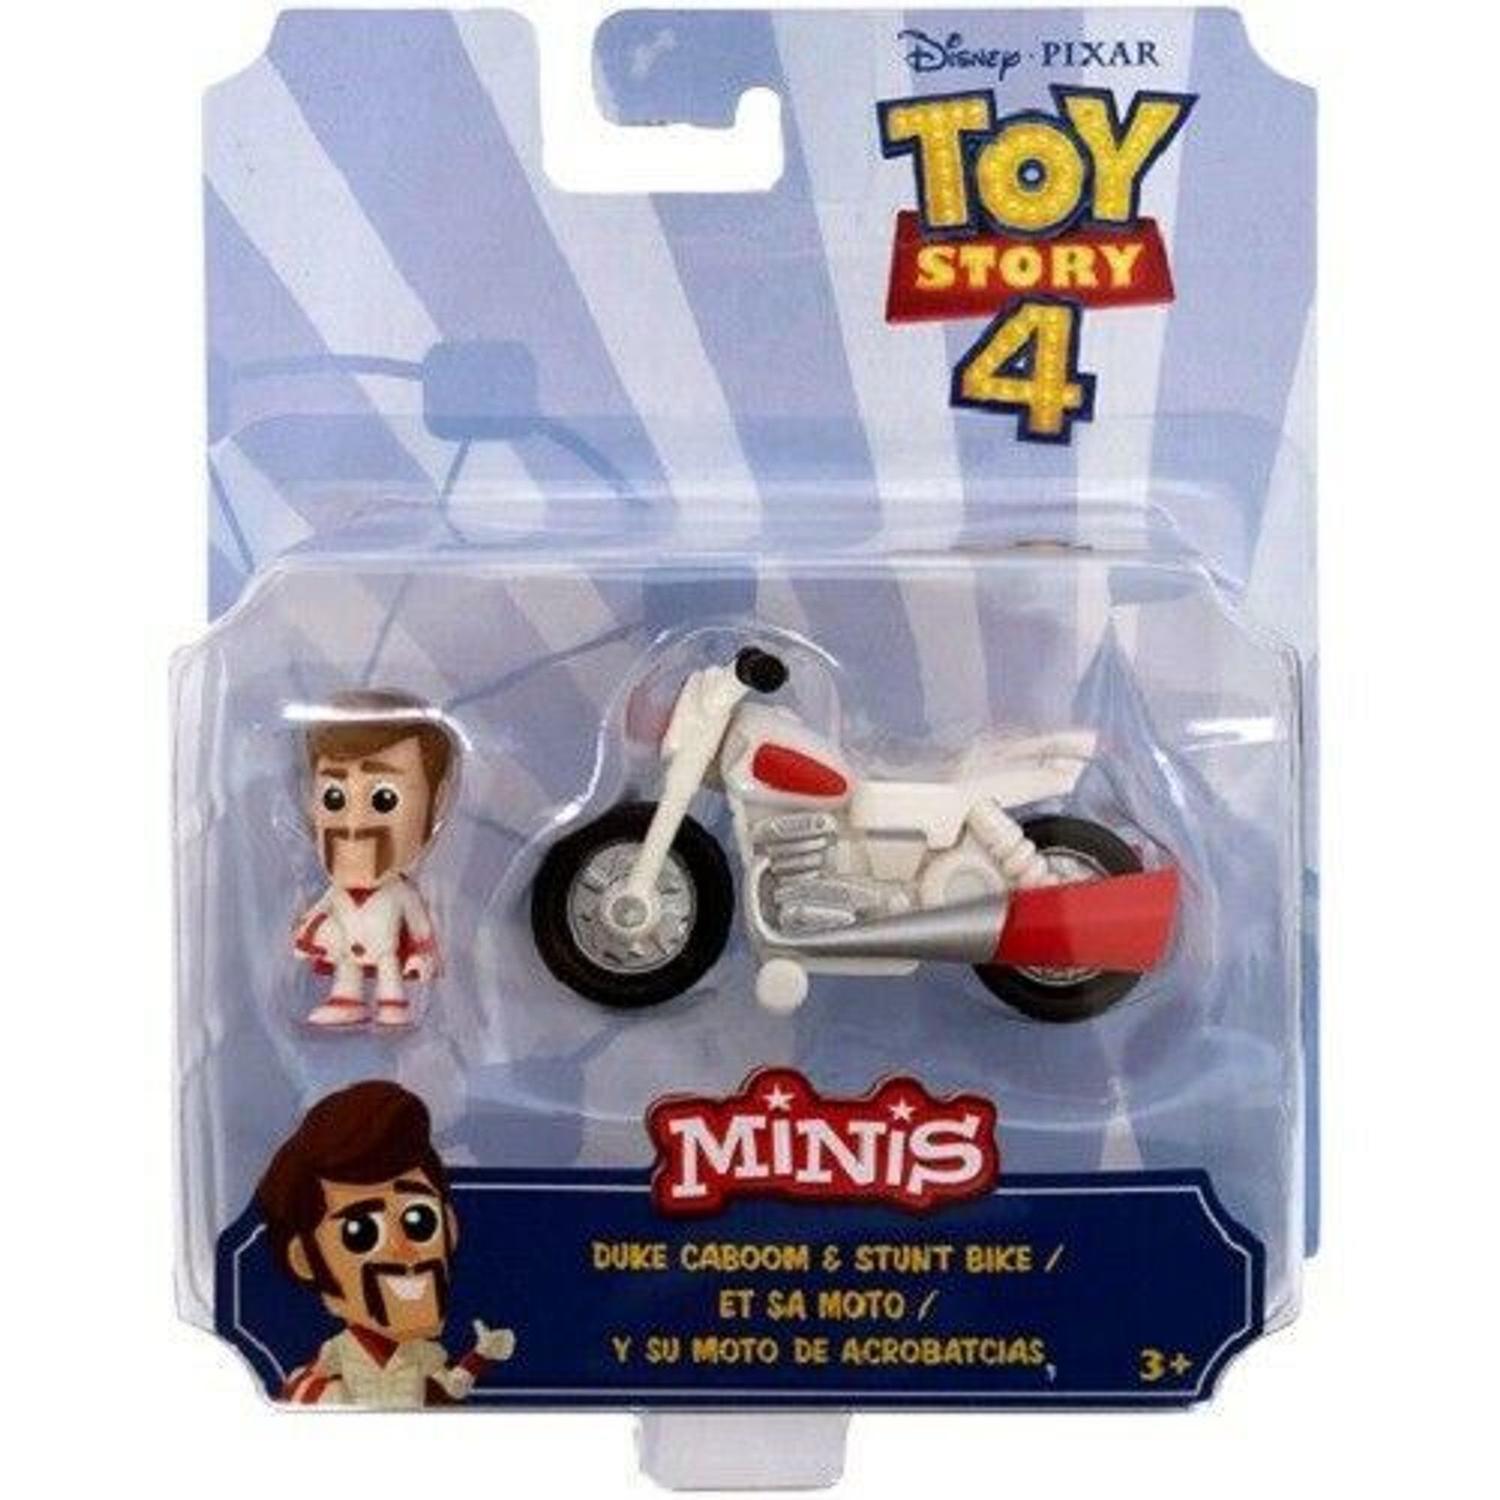 Duke caboom Mini Figure Toy Story 4 